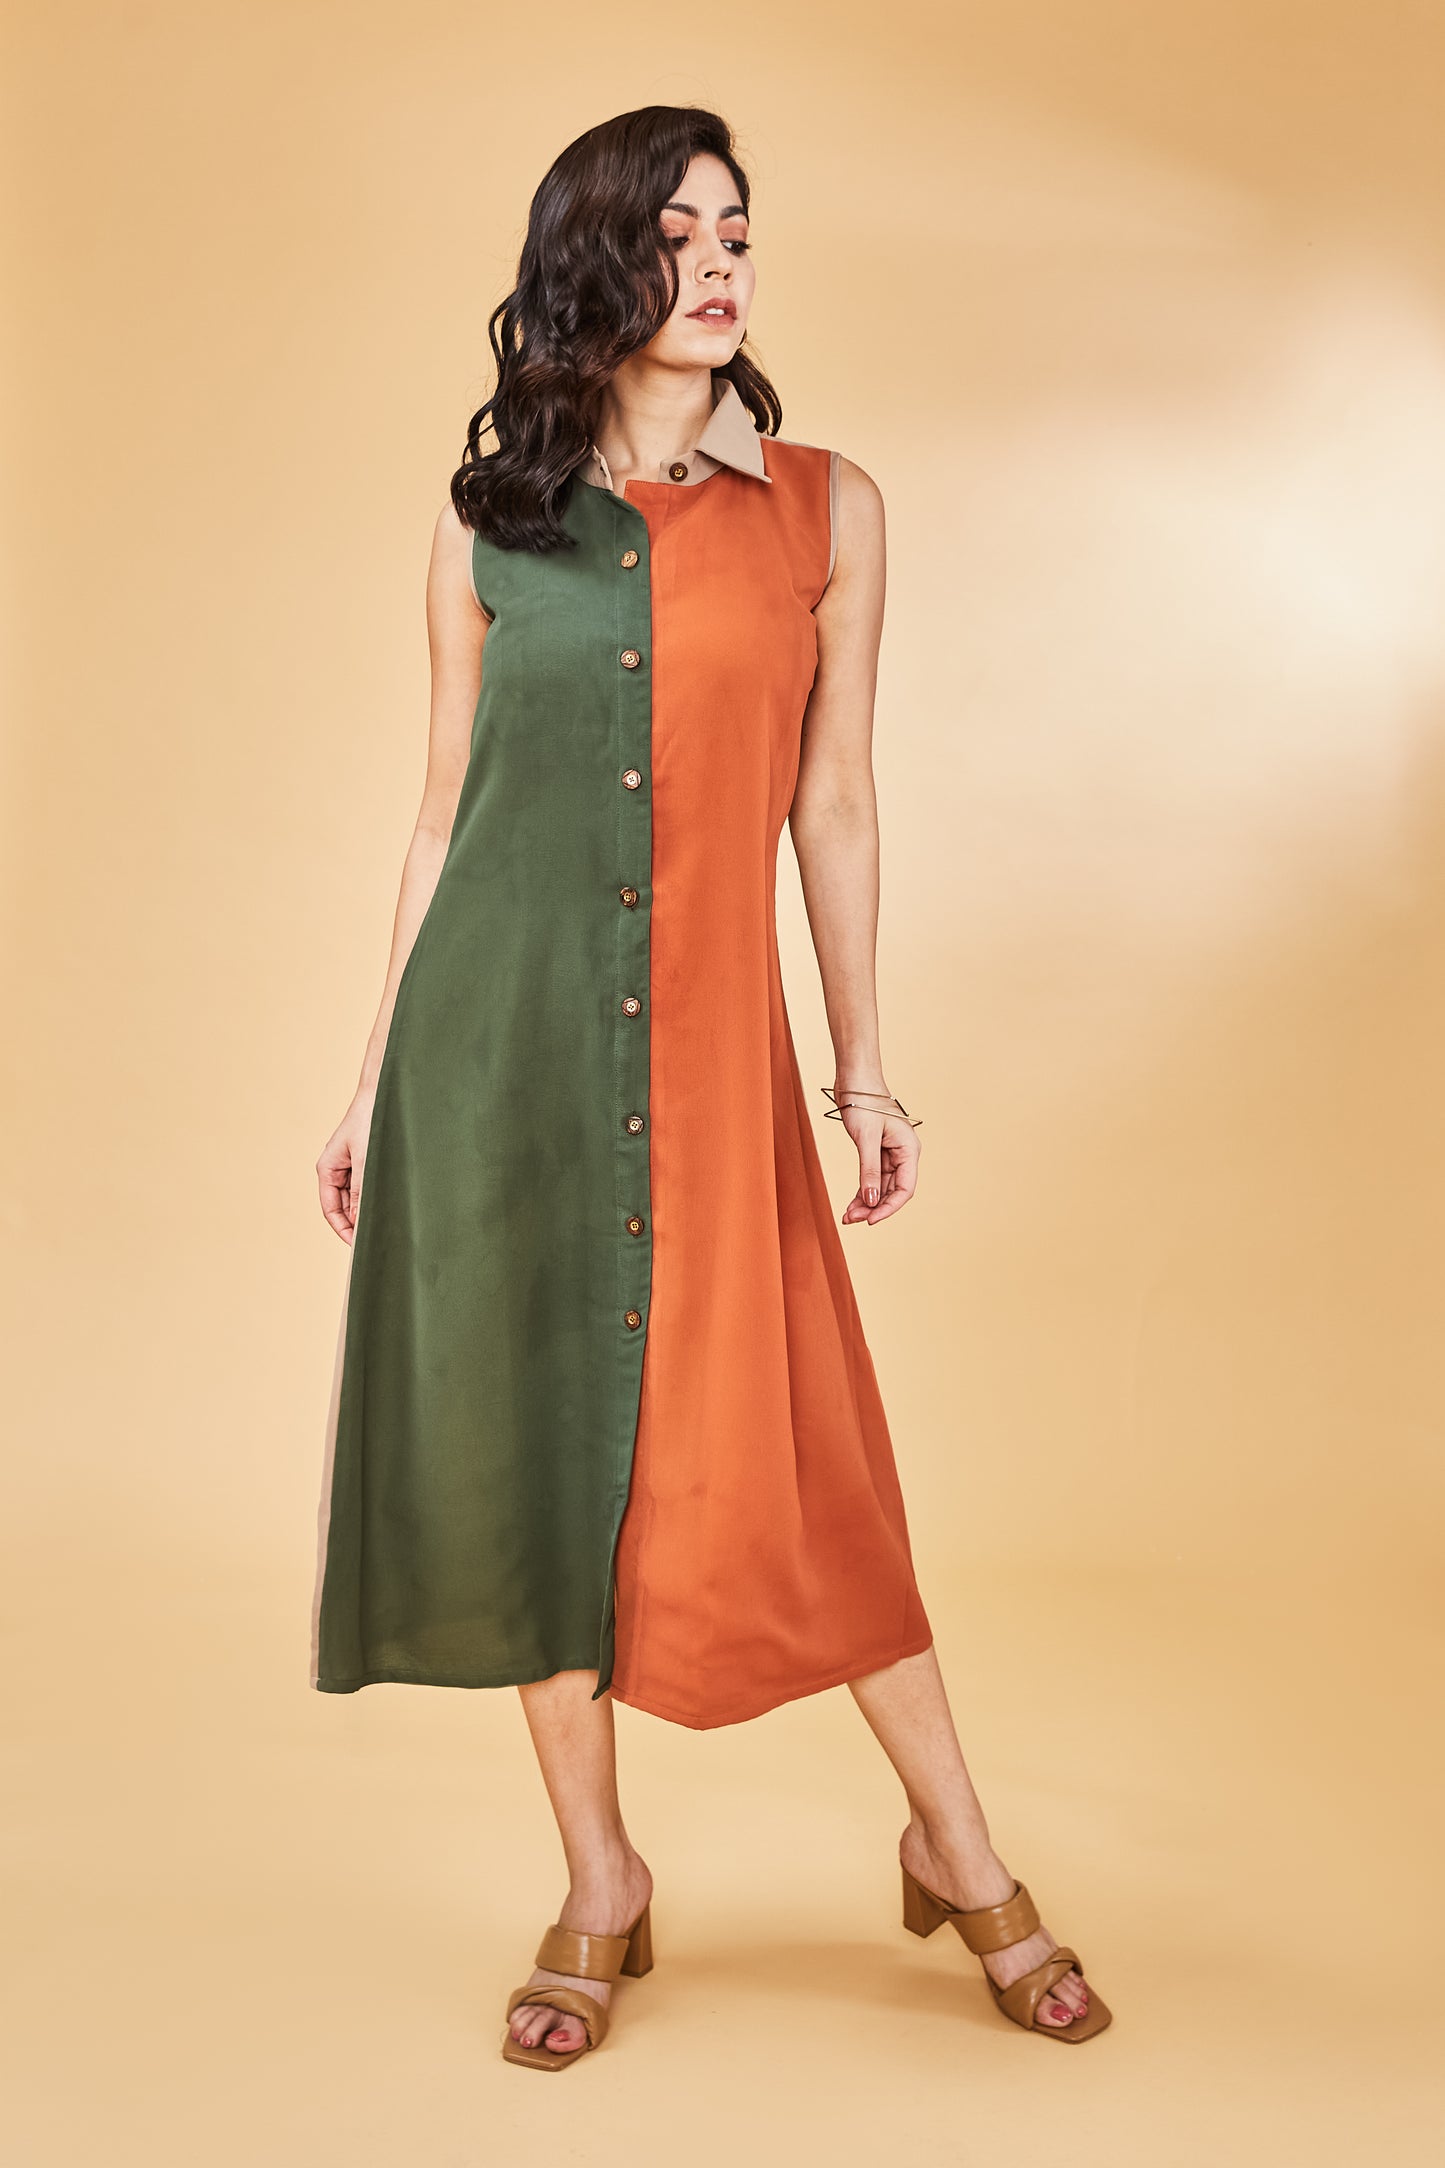 Tri-colour button down dress